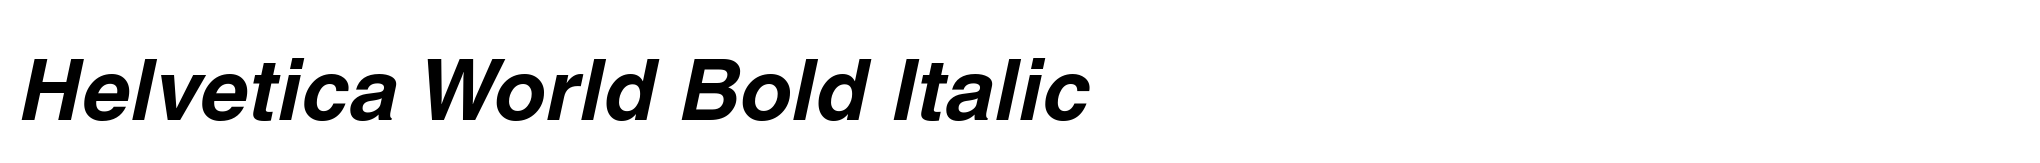 Helvetica World Bold Italic image